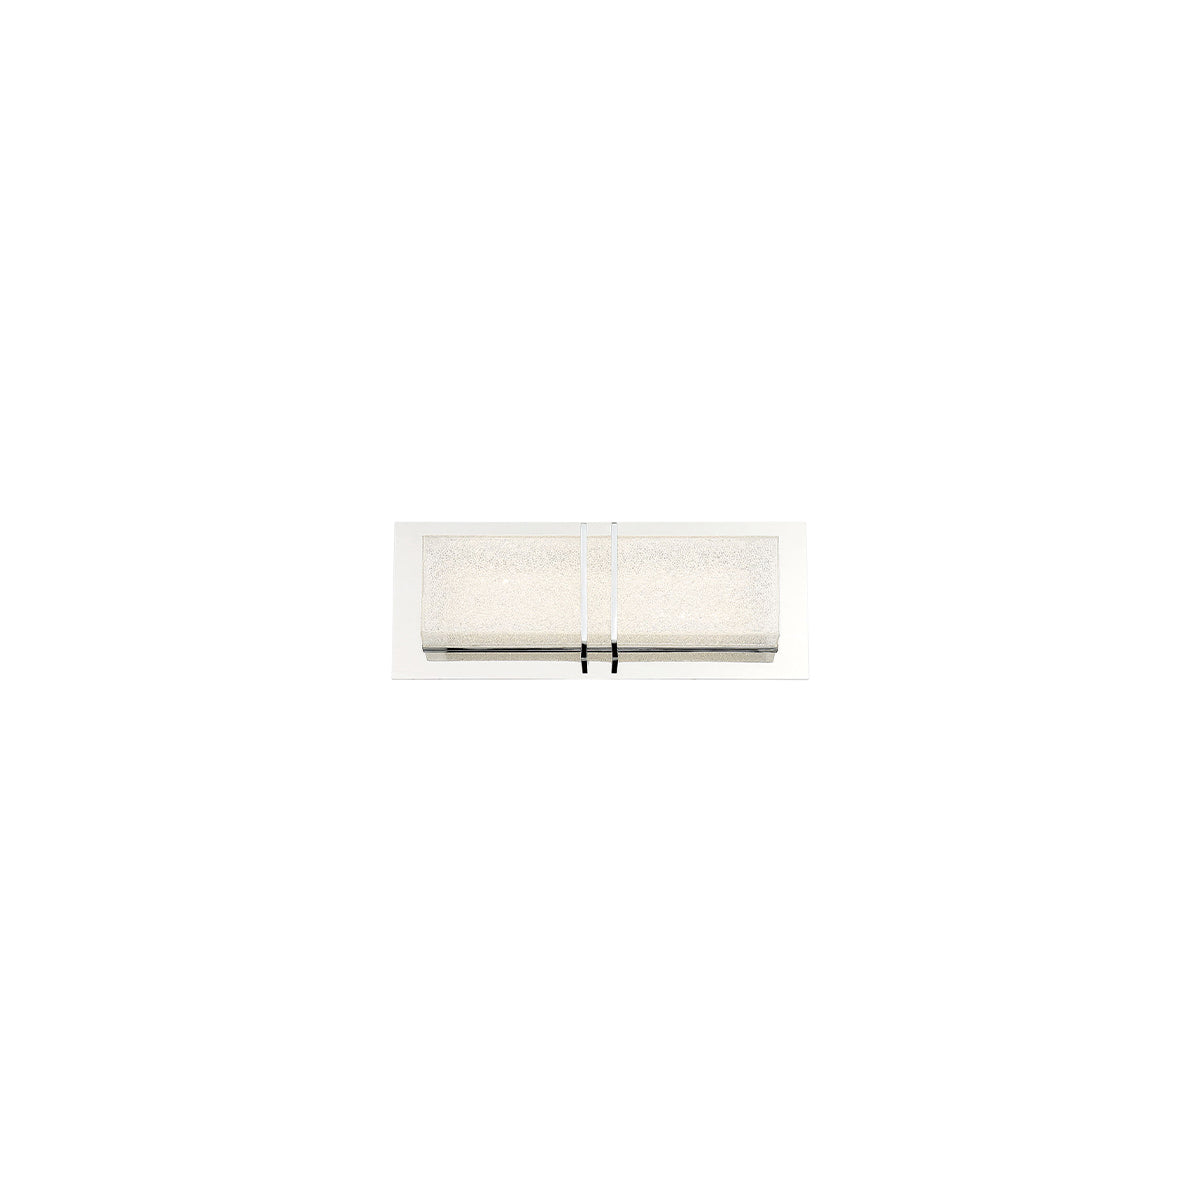 SPENCER Bathroom sconce Chrome - 37112-011 INTEGRATED LED | EUROFASE